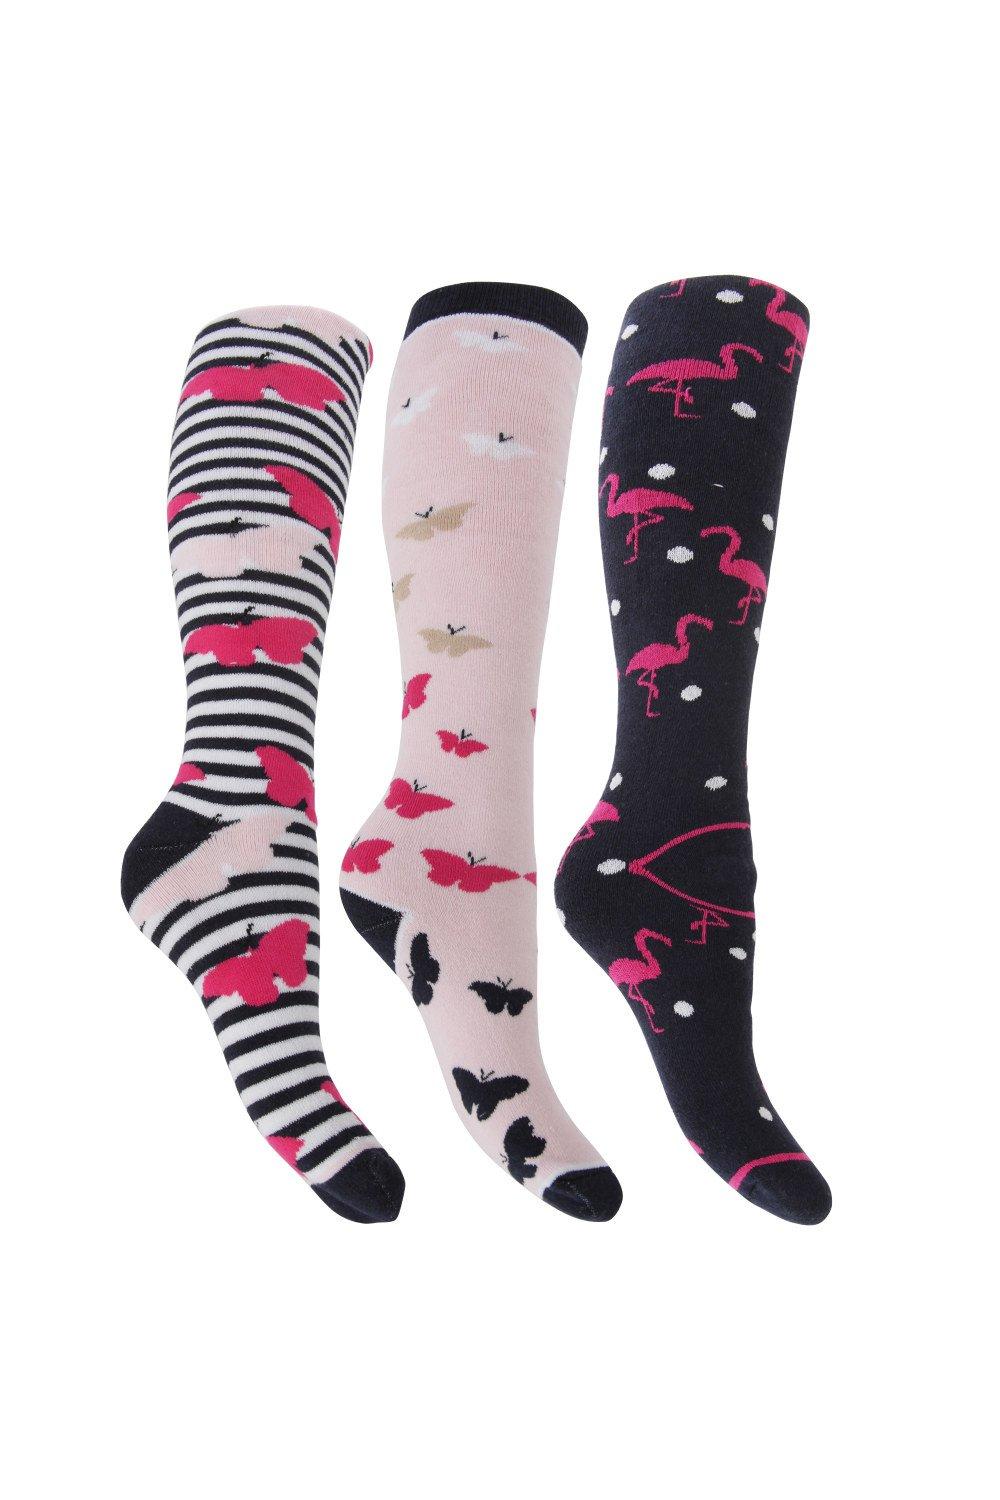 Hyperwarm Long Welly Socks (3 Pairs)